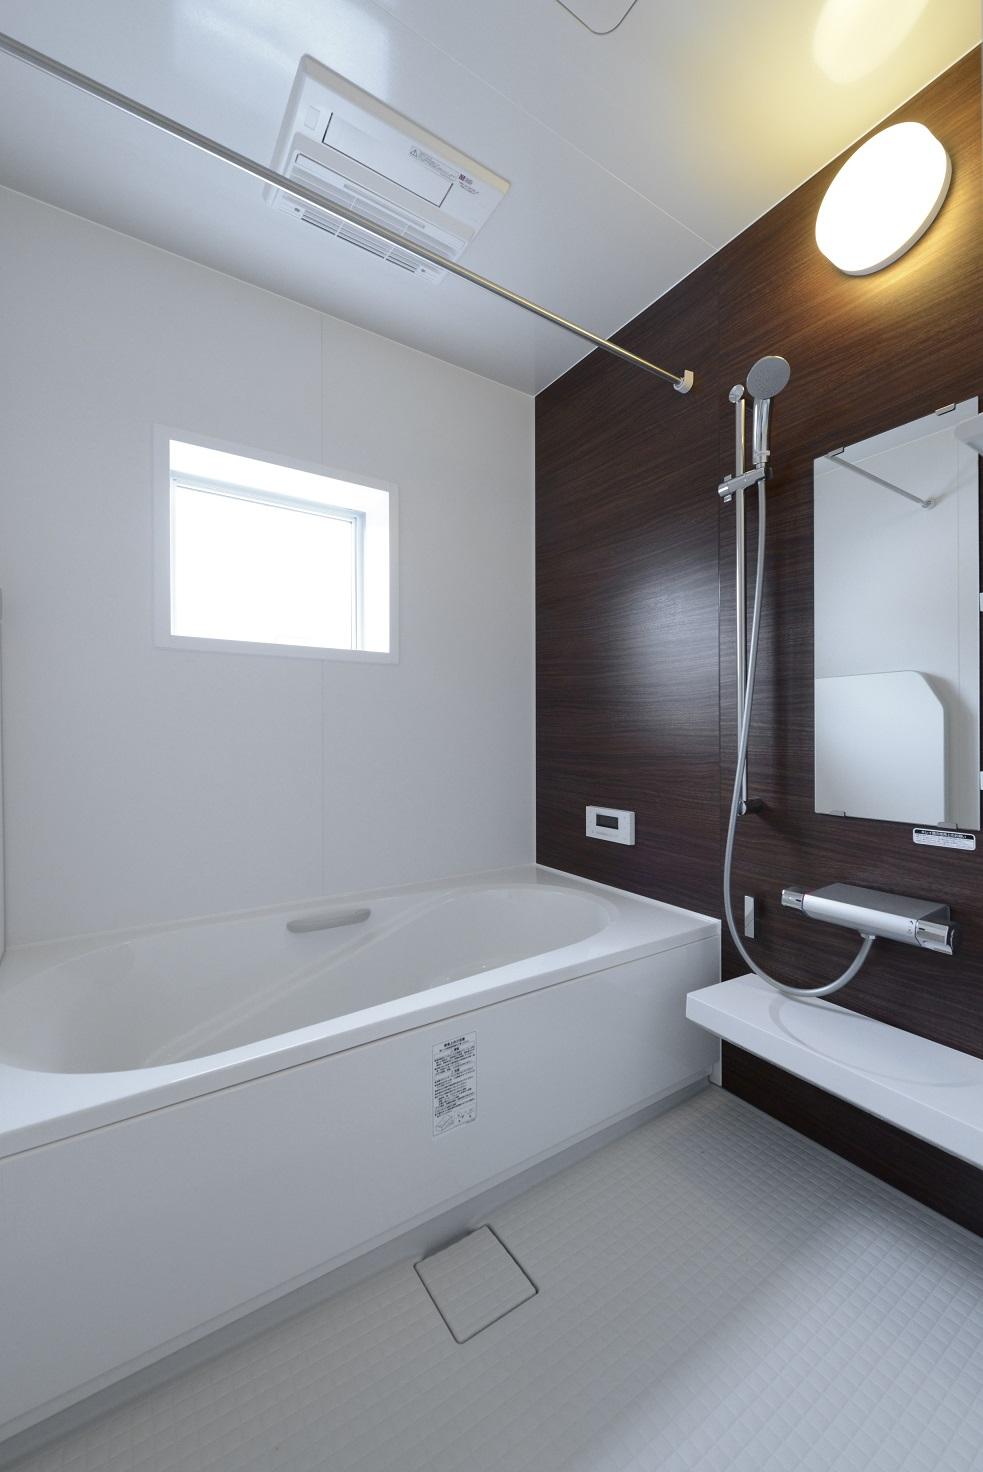 Bathroom. Unit bus bathroom with heating dryer of 1 pyeong size